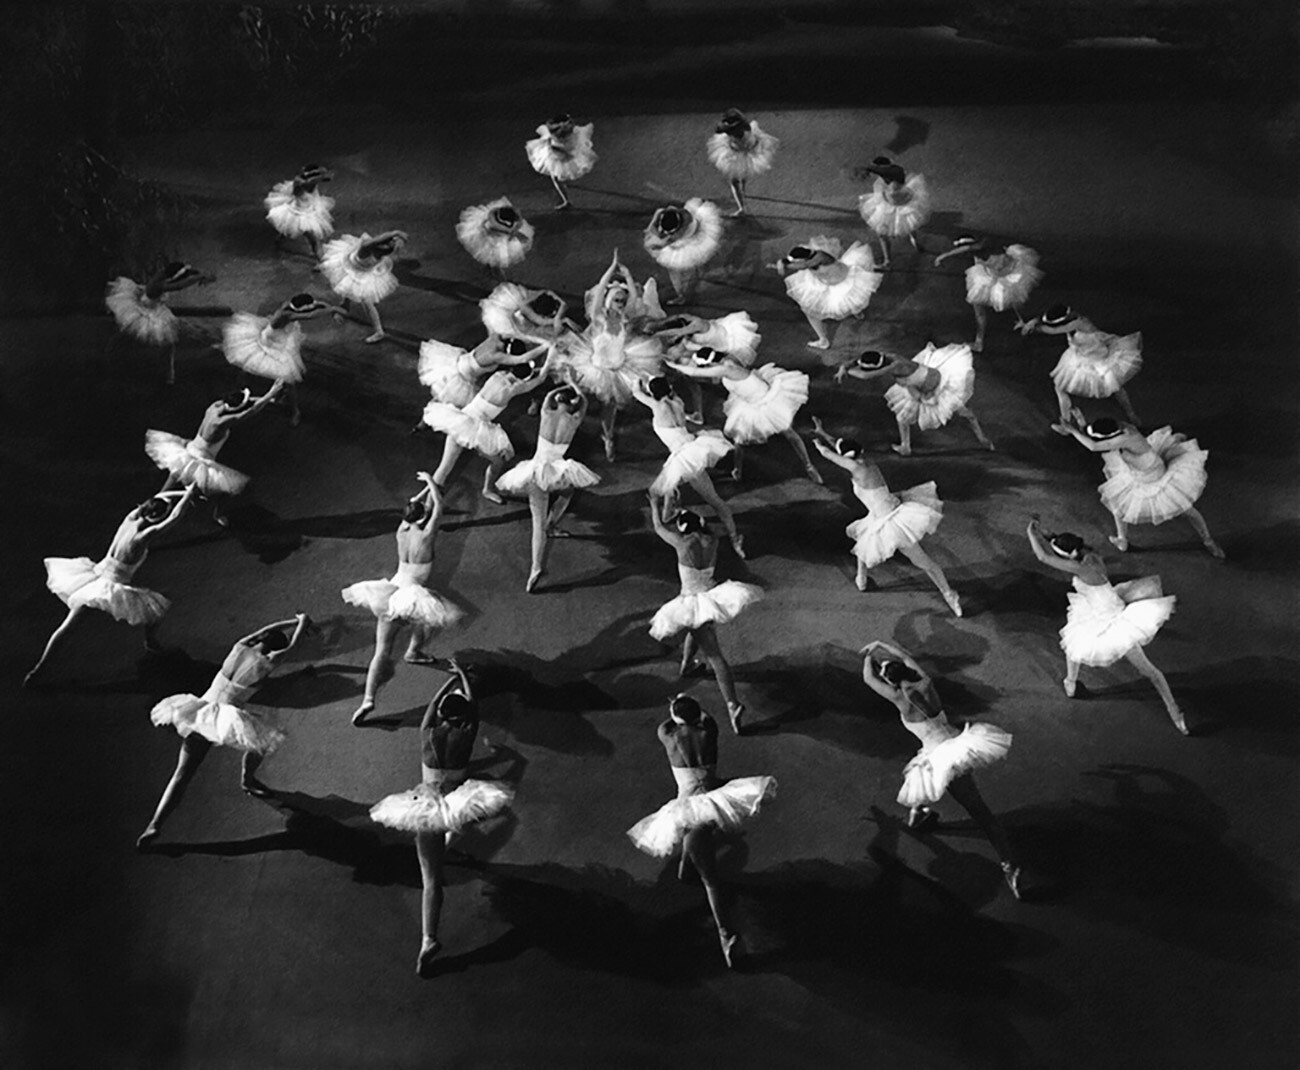 Swan Lake in the Bolshoi Theater, 1950s